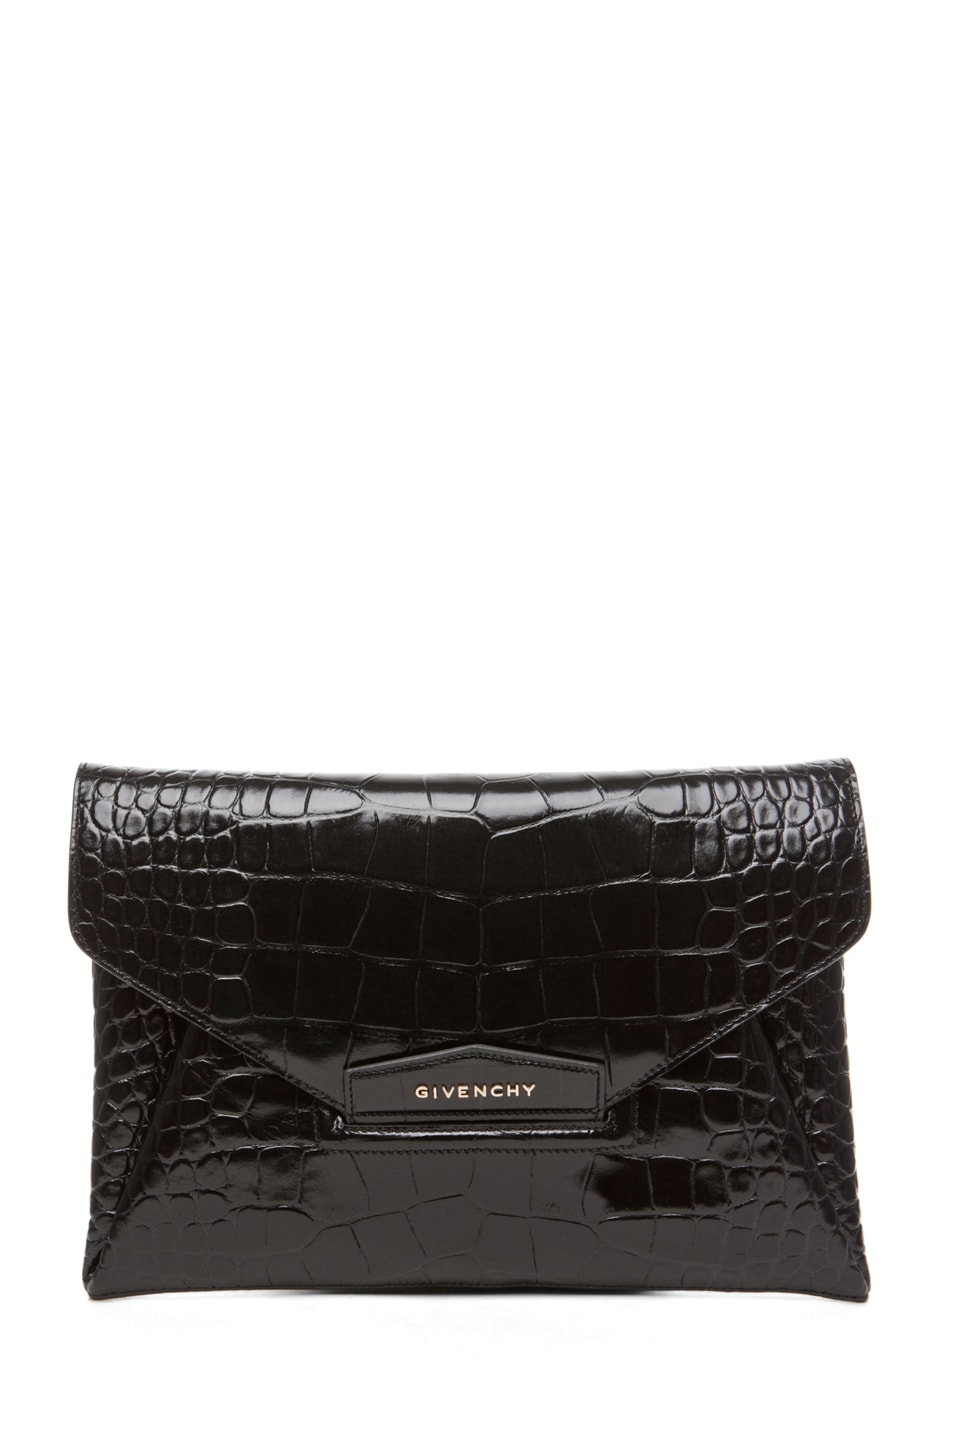 Givenchy Antigona Croc Envelope Clutch in Black | FWRD